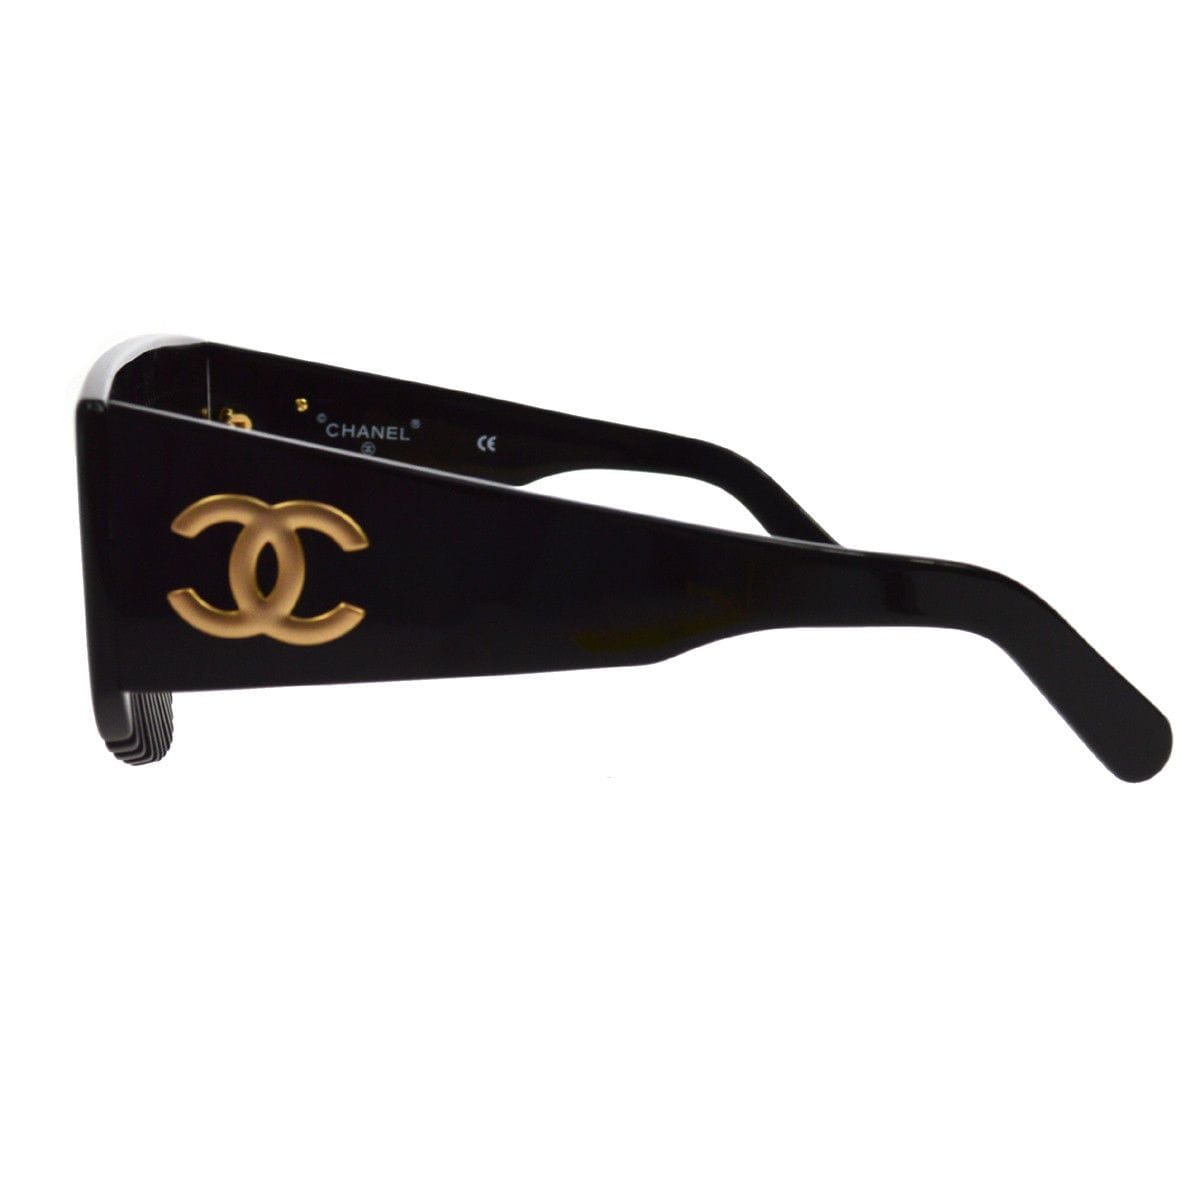 Chanel Square Sunglasses - Acetate, Black - Polarized - UV Protected - Women's Sunglasses - 5494 C622/S9